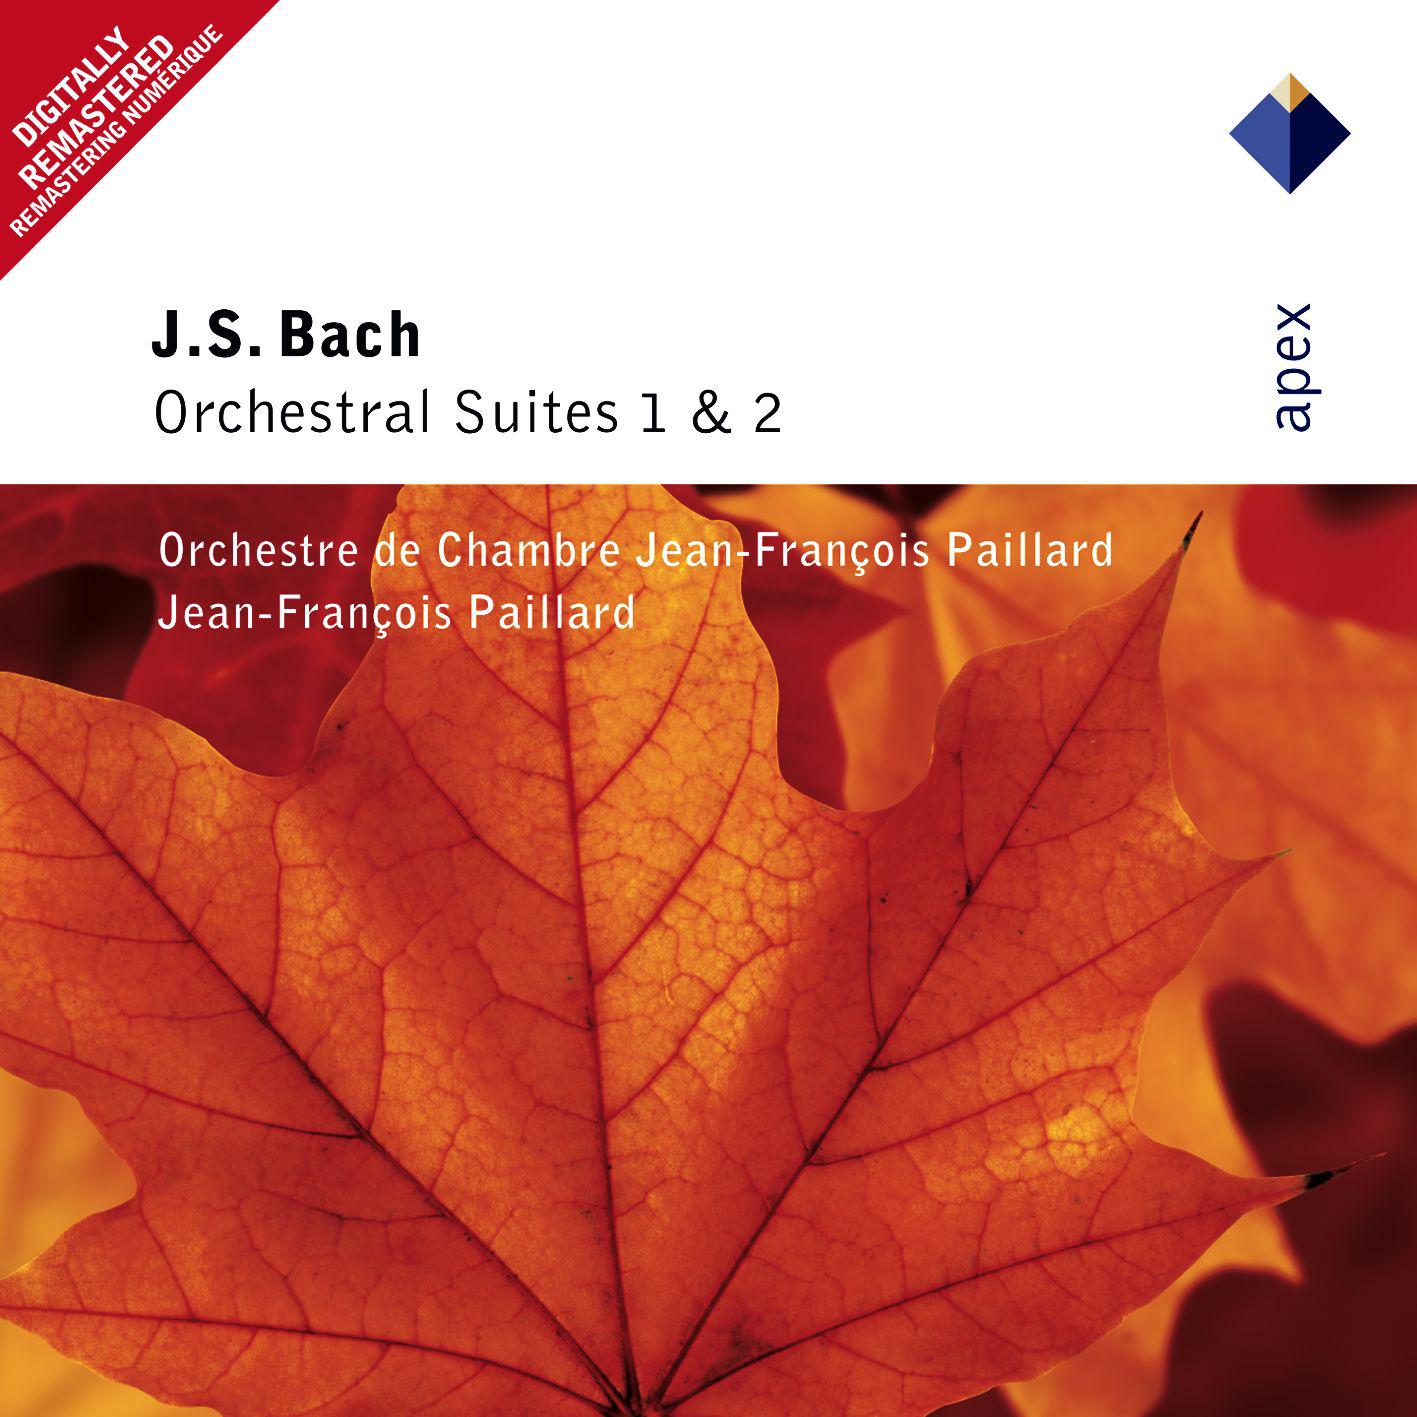 Orchestral Suite No. 1 in C Major, BWV 1066: VI. Bourre es I  II